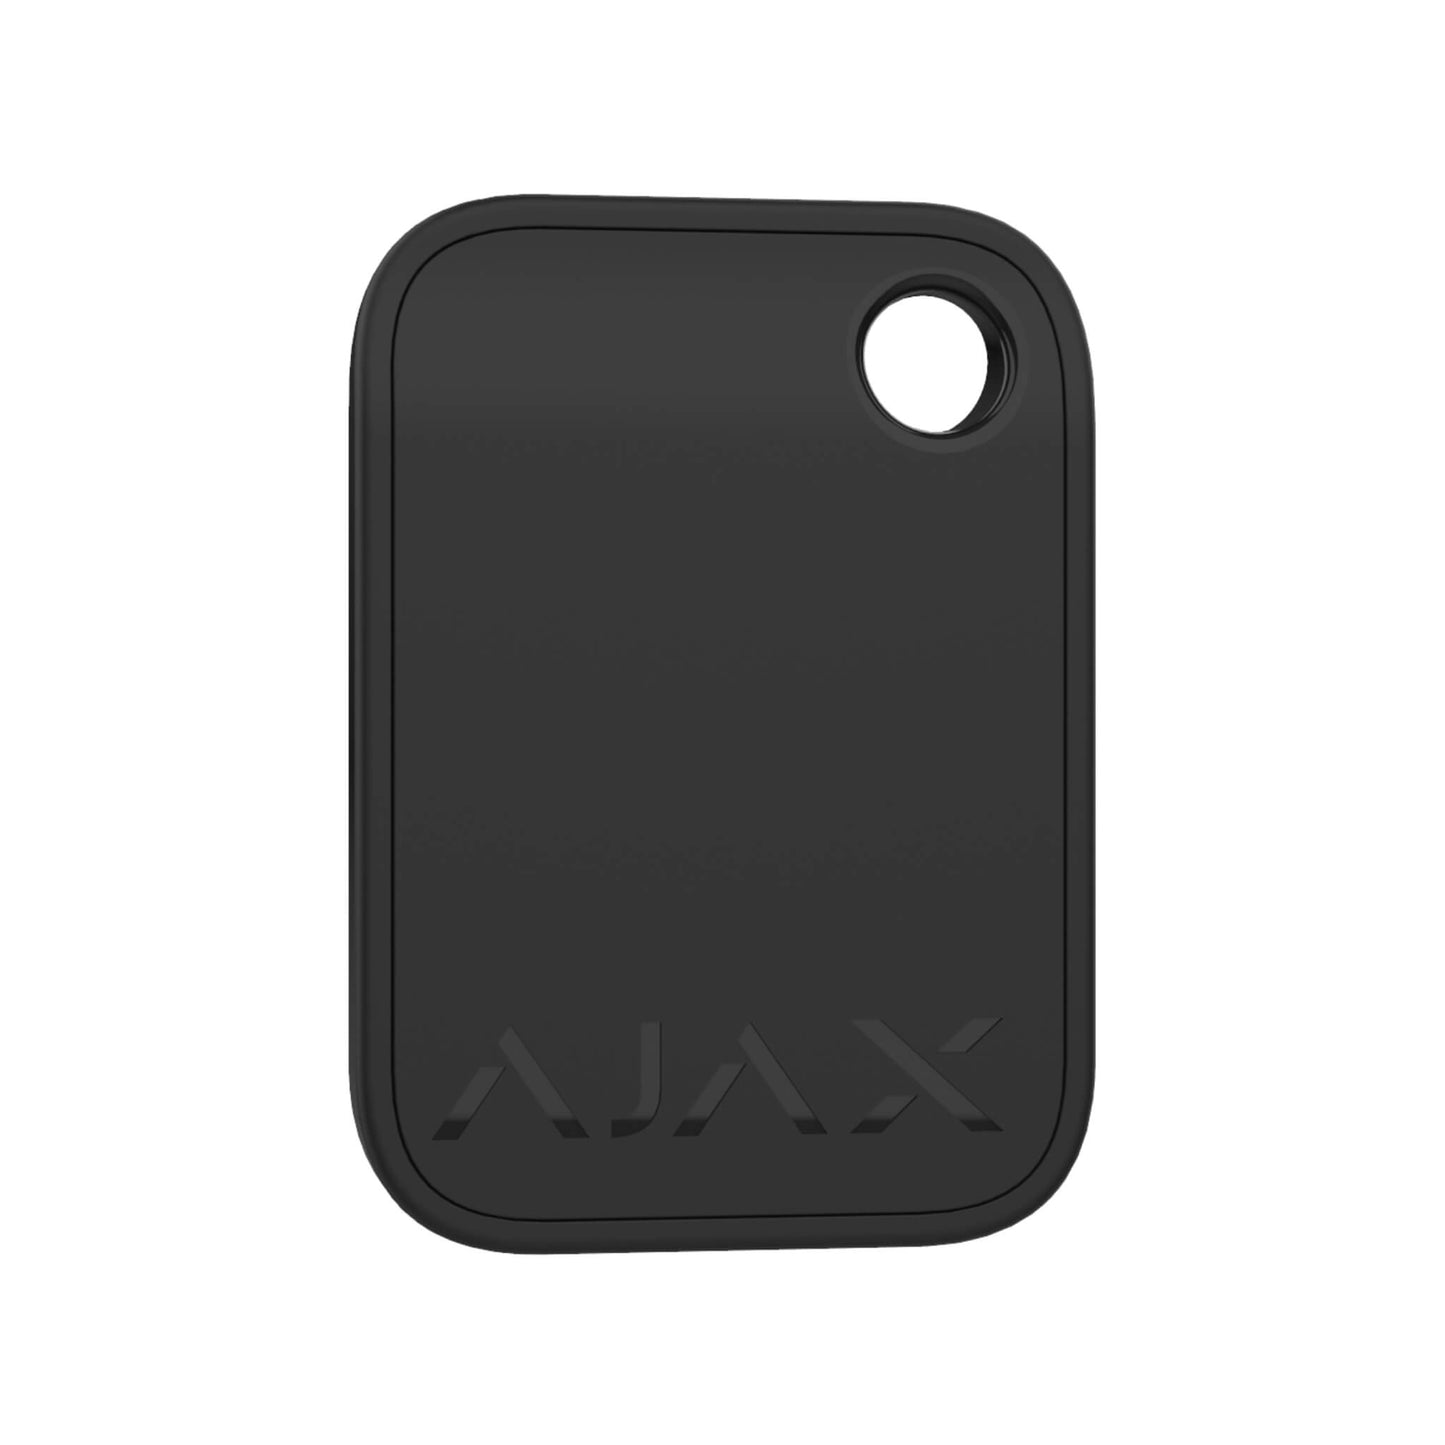 Ajax Tag - Encrypted contactless key fob for Ajax Keypad Plus